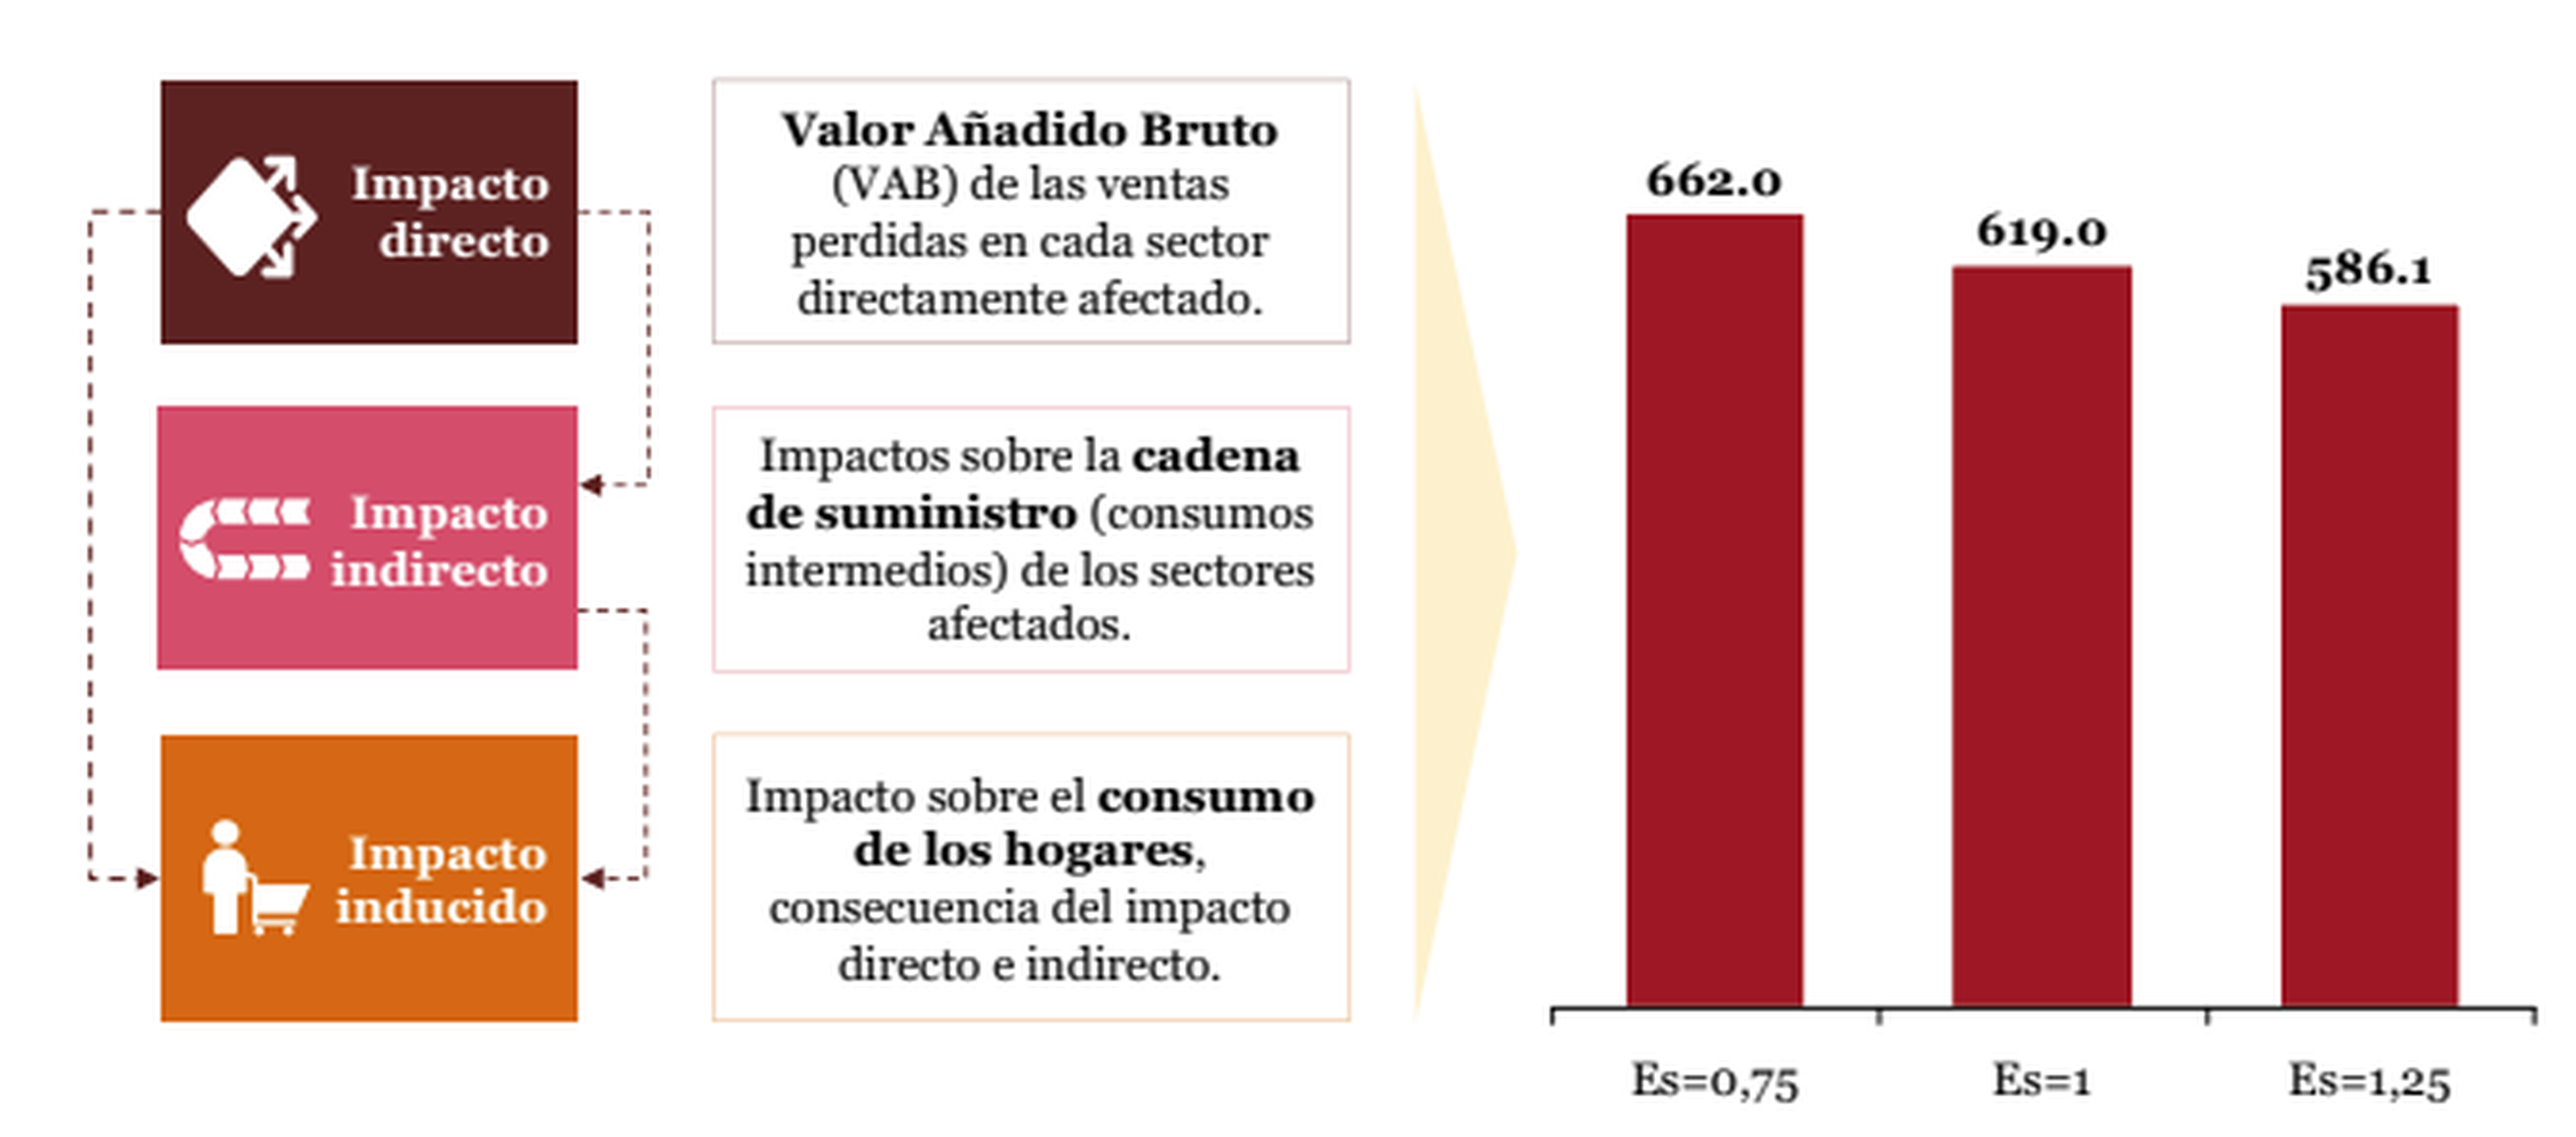 PwC prevé que la tasa Google lastre el PIB español